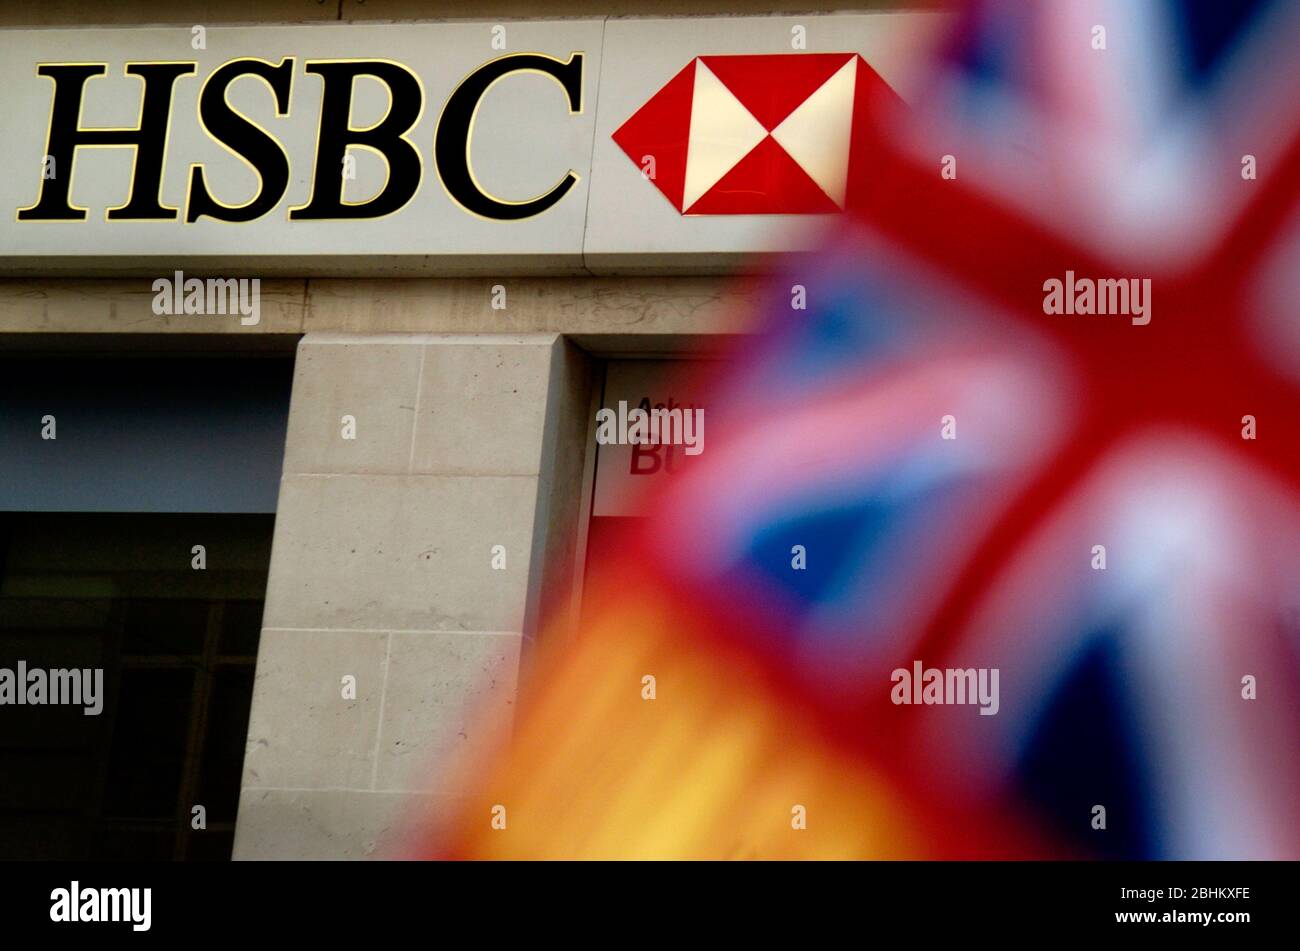 Exterior shot of a HSBC branch. Stock Photo